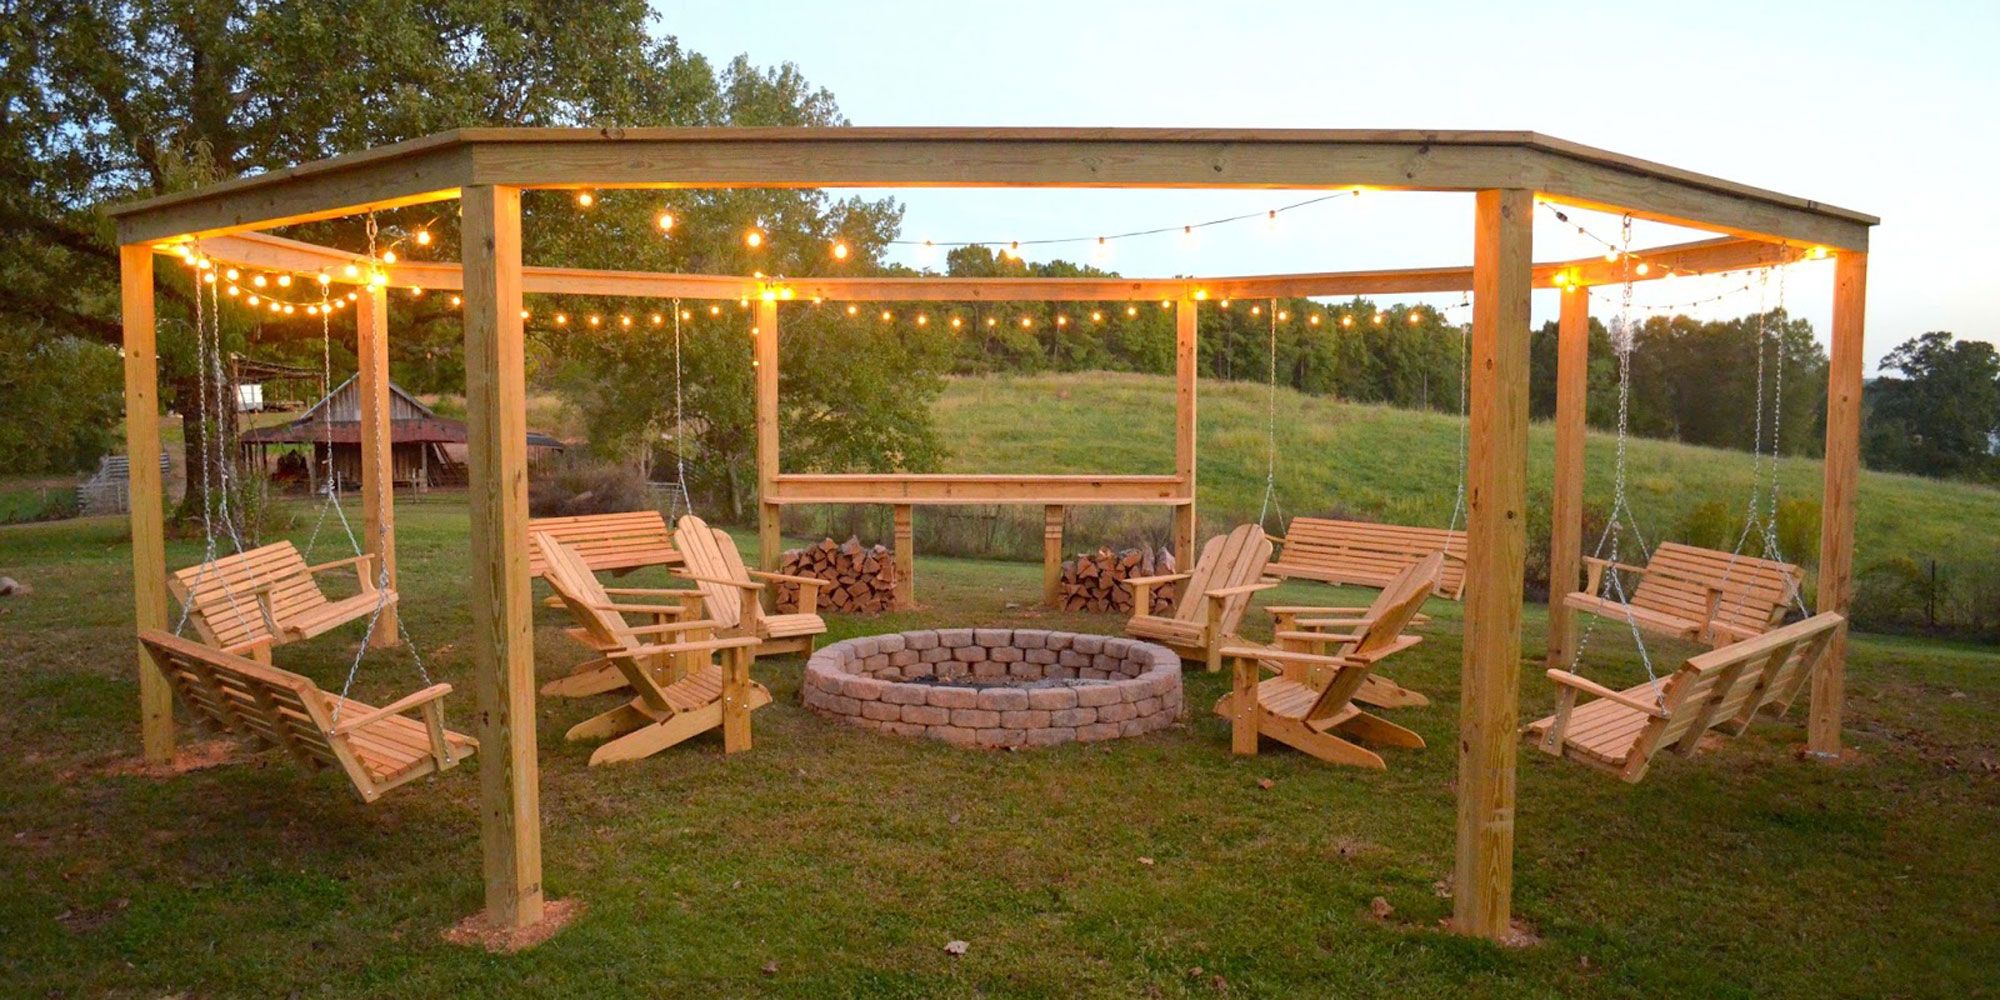 This DIY Backyard Pergola Is the Ultimate Summer Hangout Spot